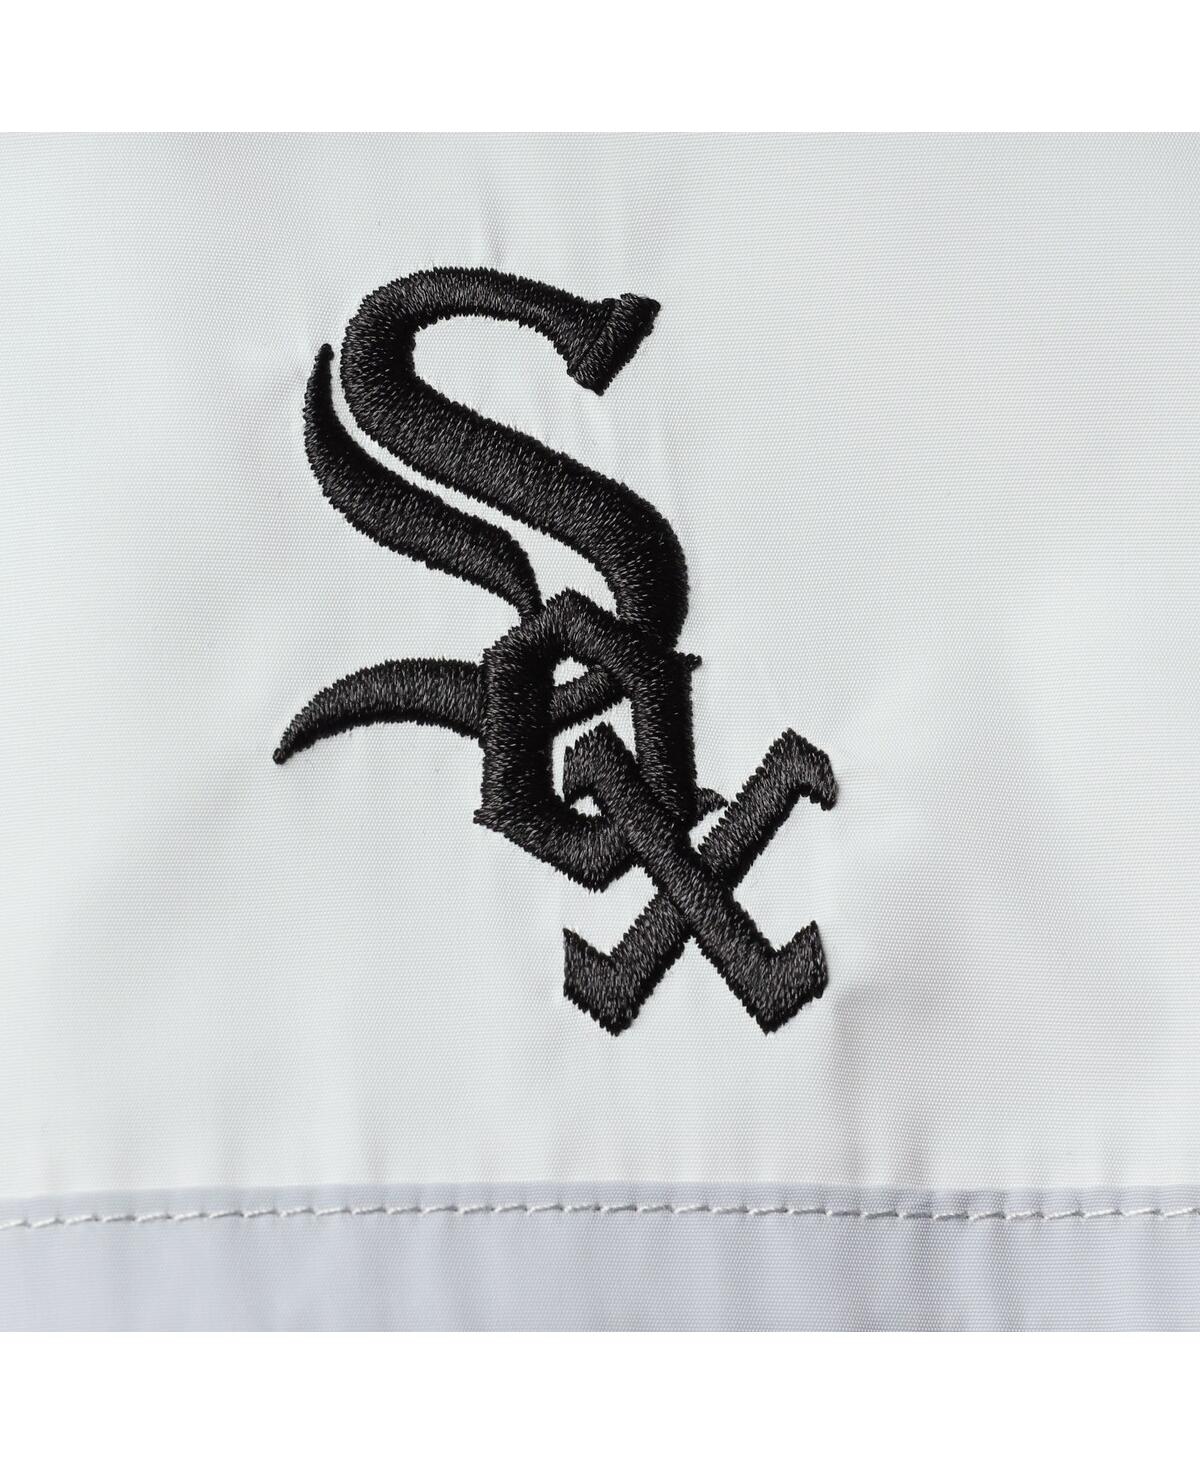 Shop The Wild Collective Women's  Black Chicago White Sox Colorblock Track Raglan Full-zip Jacket